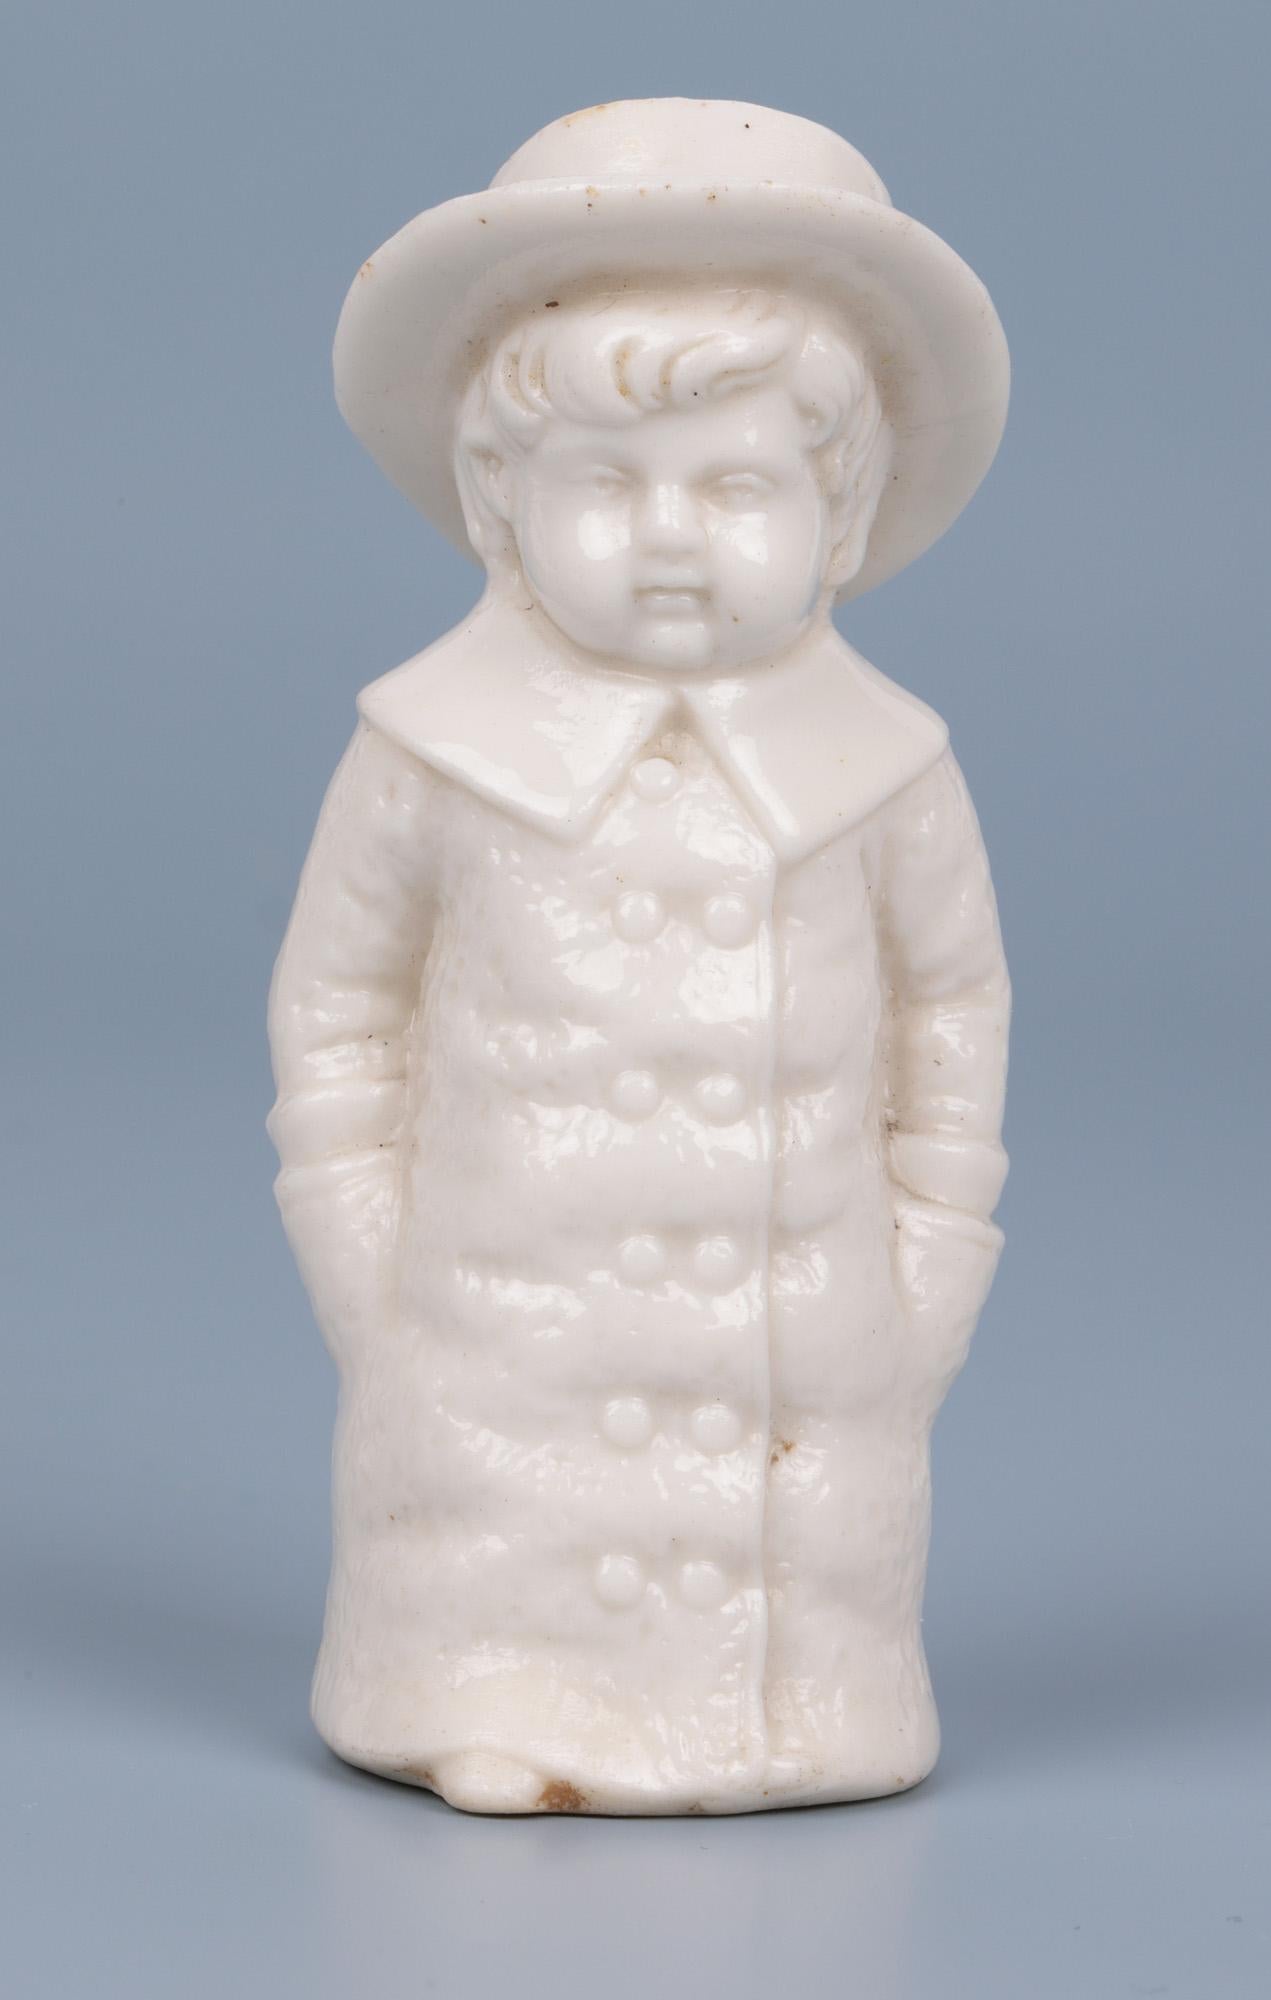 Glazed Antique English Porcelain Boy in Hat Pepper or Pounce Pot For Sale